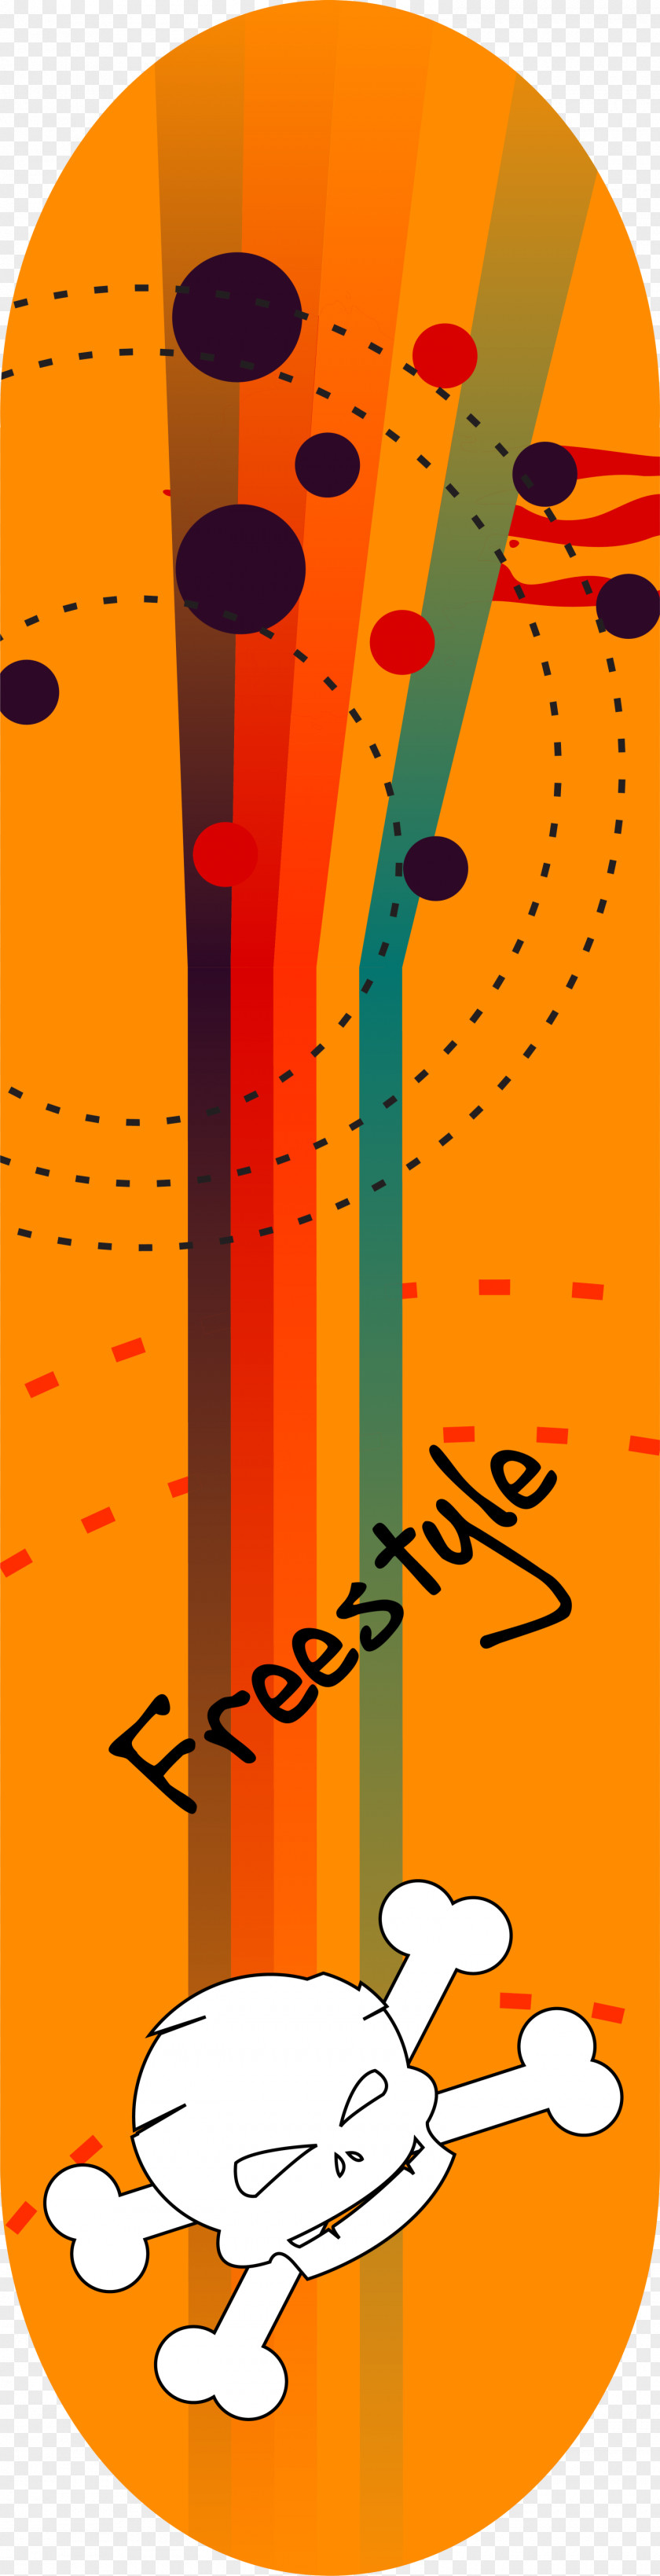 Orange Circle Slide Skateboard PNG